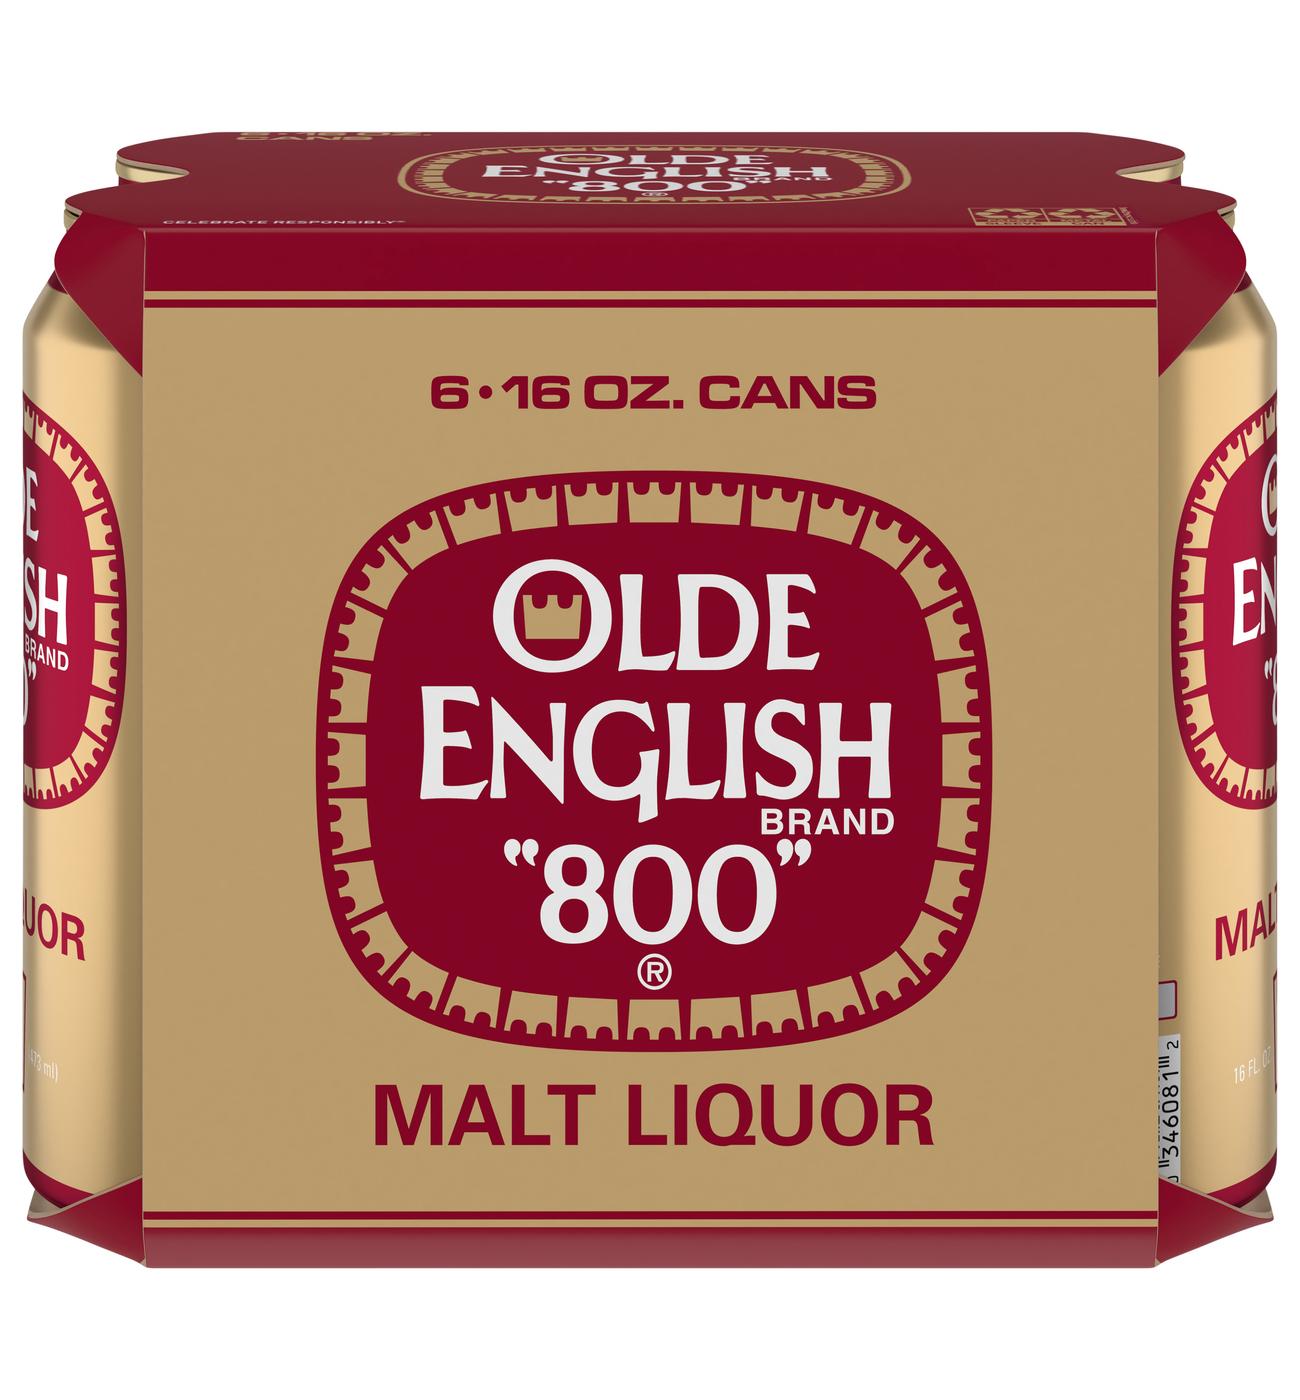 Olde English 800 Malt Liquor 16 oz Cans; image 1 of 2